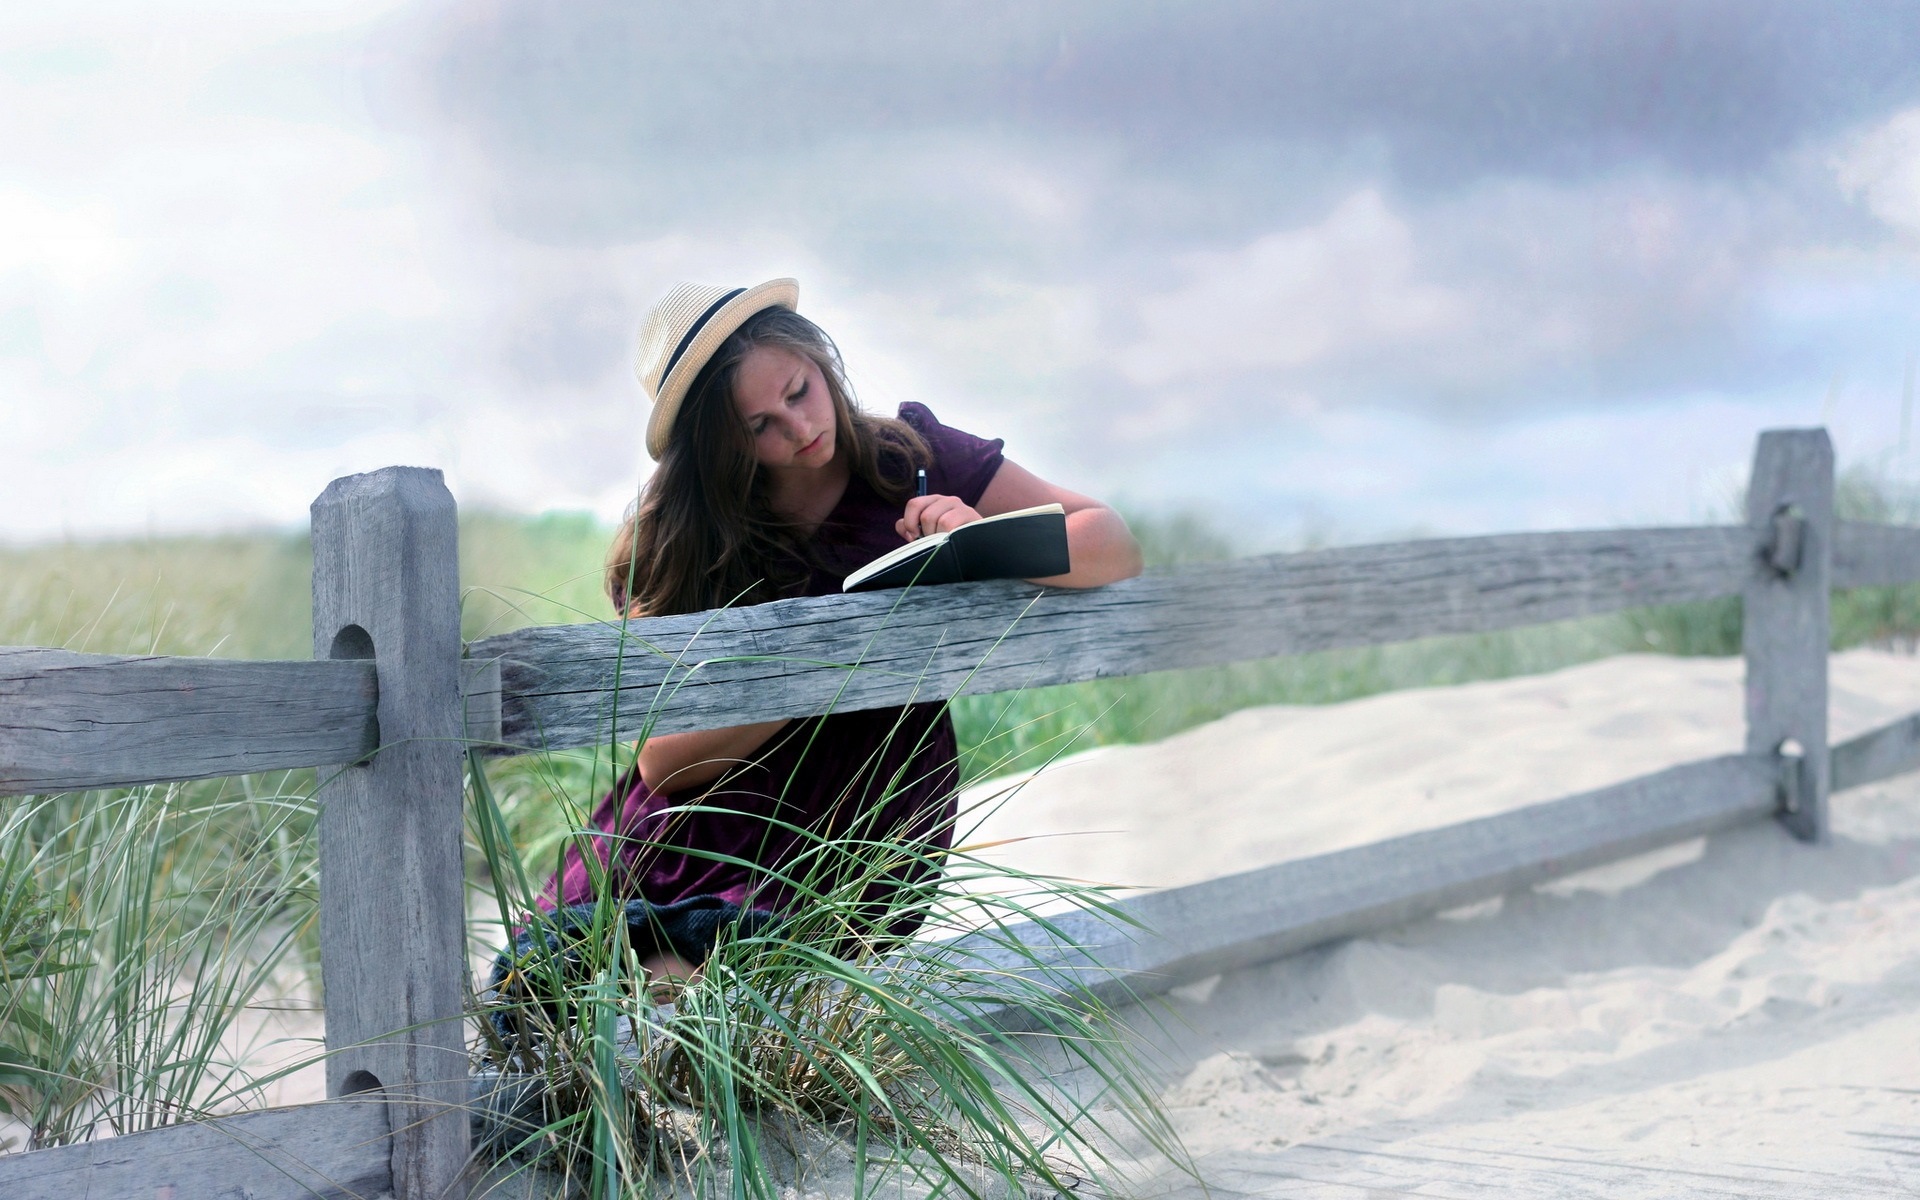 Girl-read-book-fence-outdoor_1920x1200.jpg